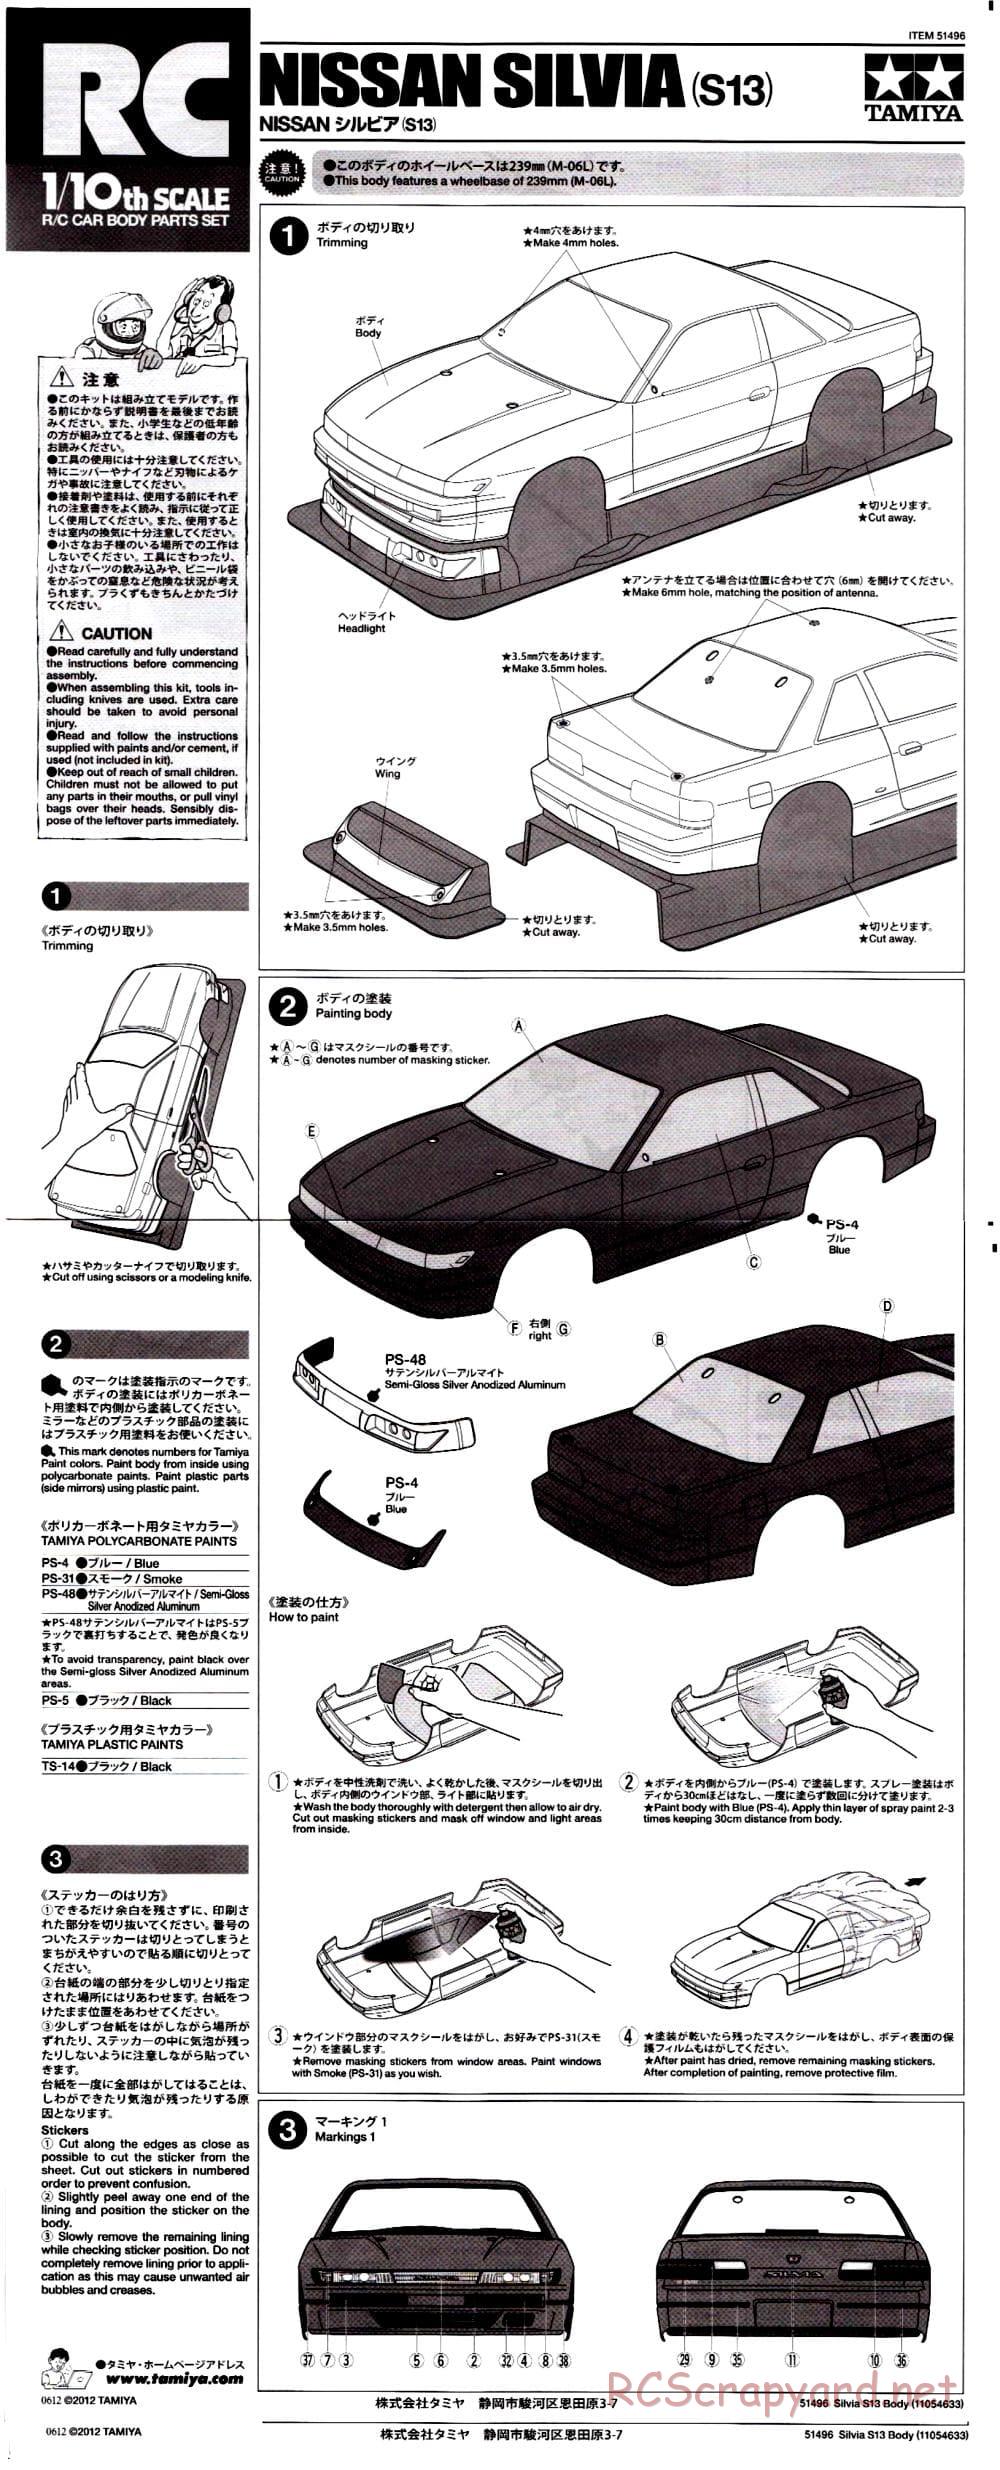 Tamiya - Nissan Silvia S-13 - M-06 Chassis - Body Manual - Page 1